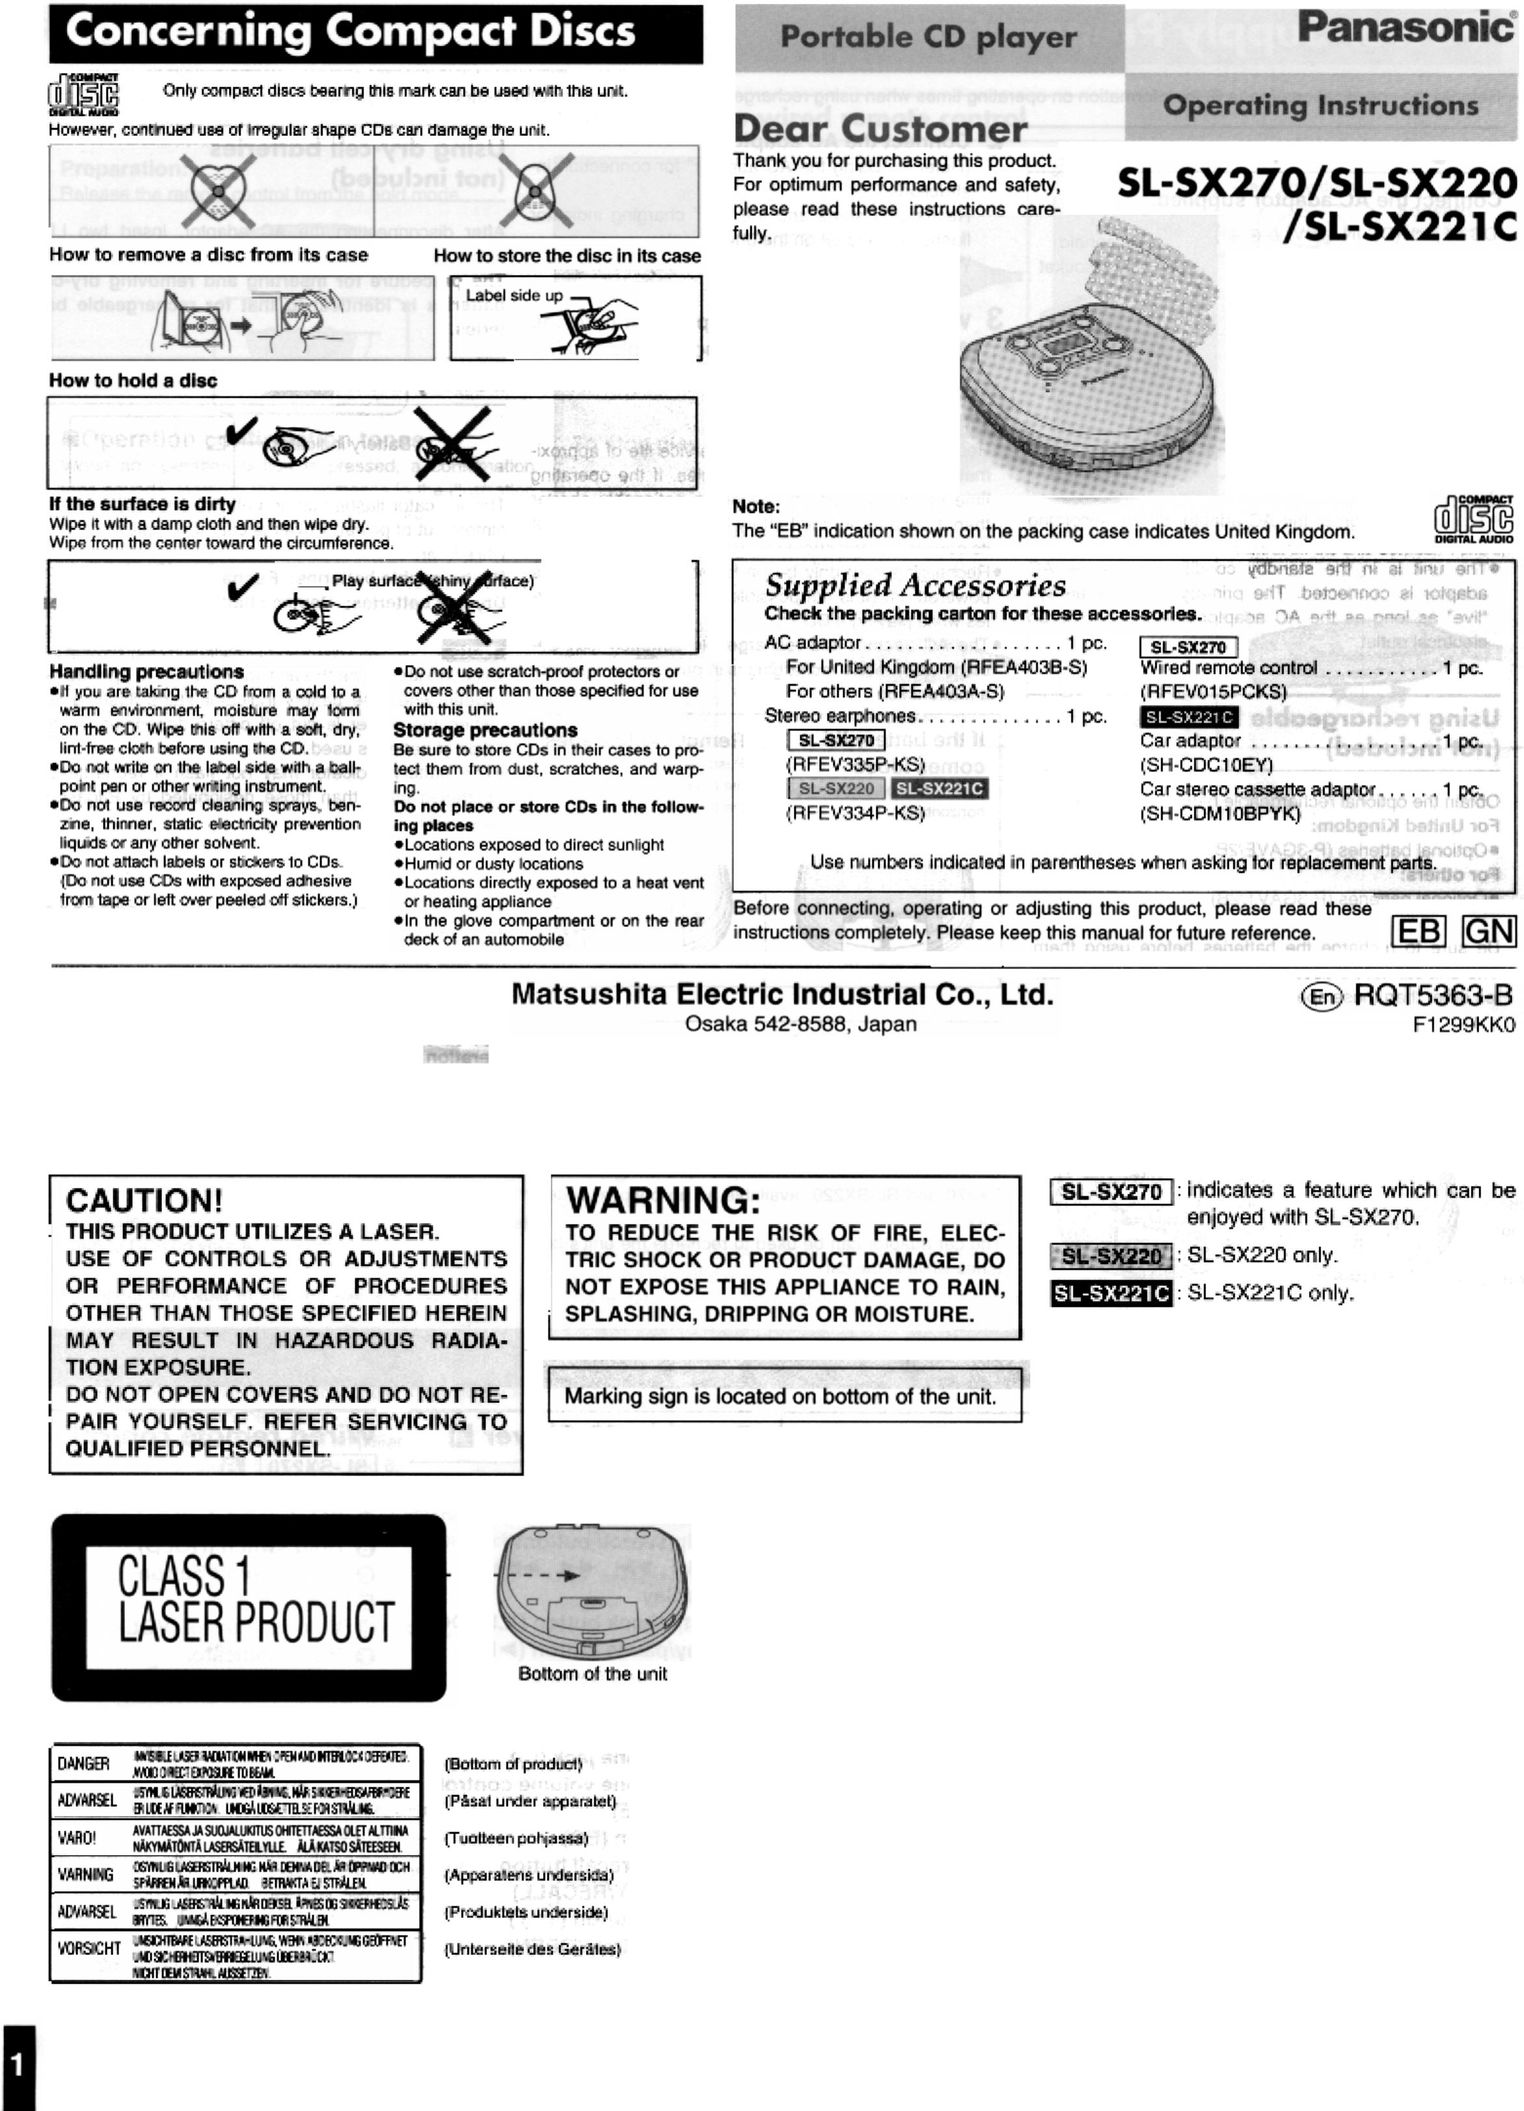 Panasonic SL-SX221C Portable CD Player User Manual